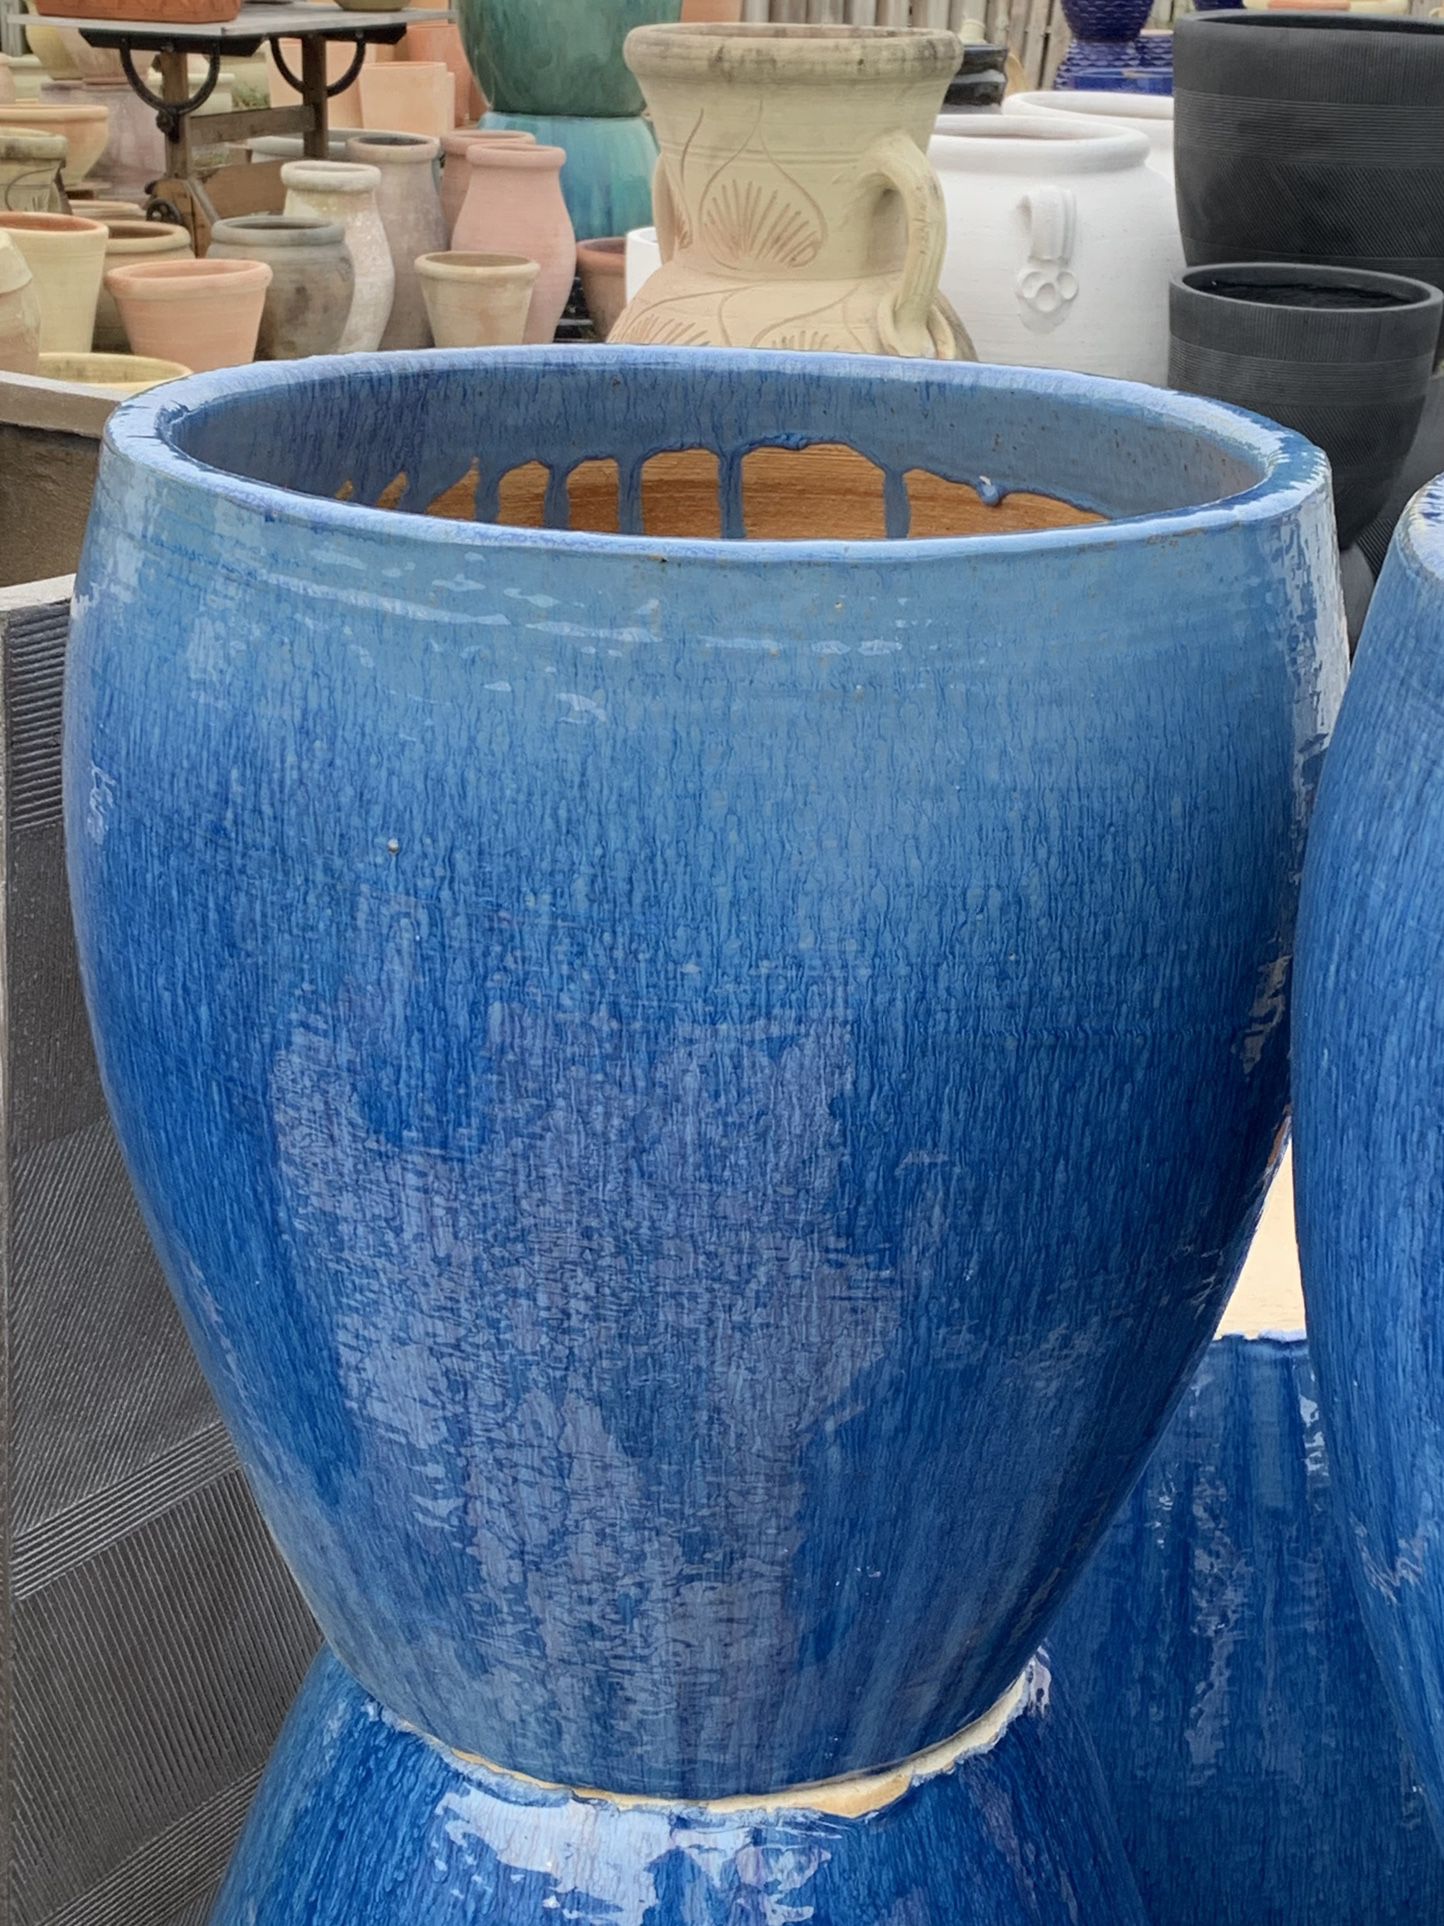 Glazed Ceramic Pot Sizes In The Description Below ⬇️ 